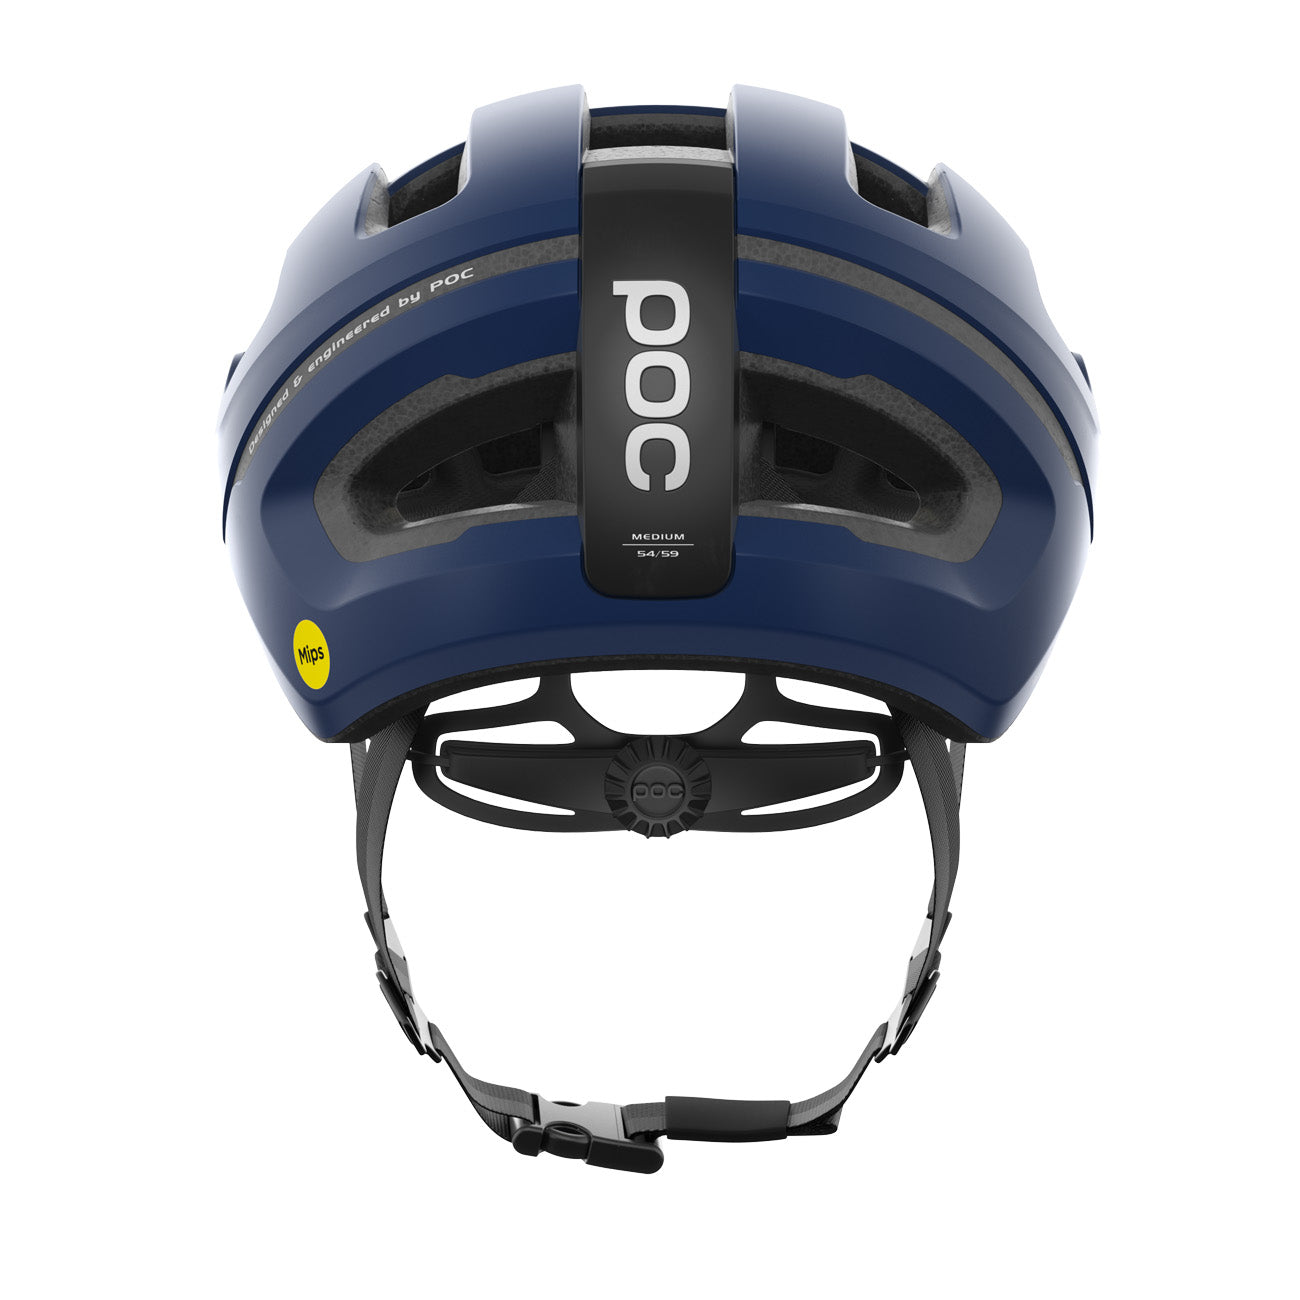 POC Omne Air MIPS Fahrrad Helm Lead Blue Matt